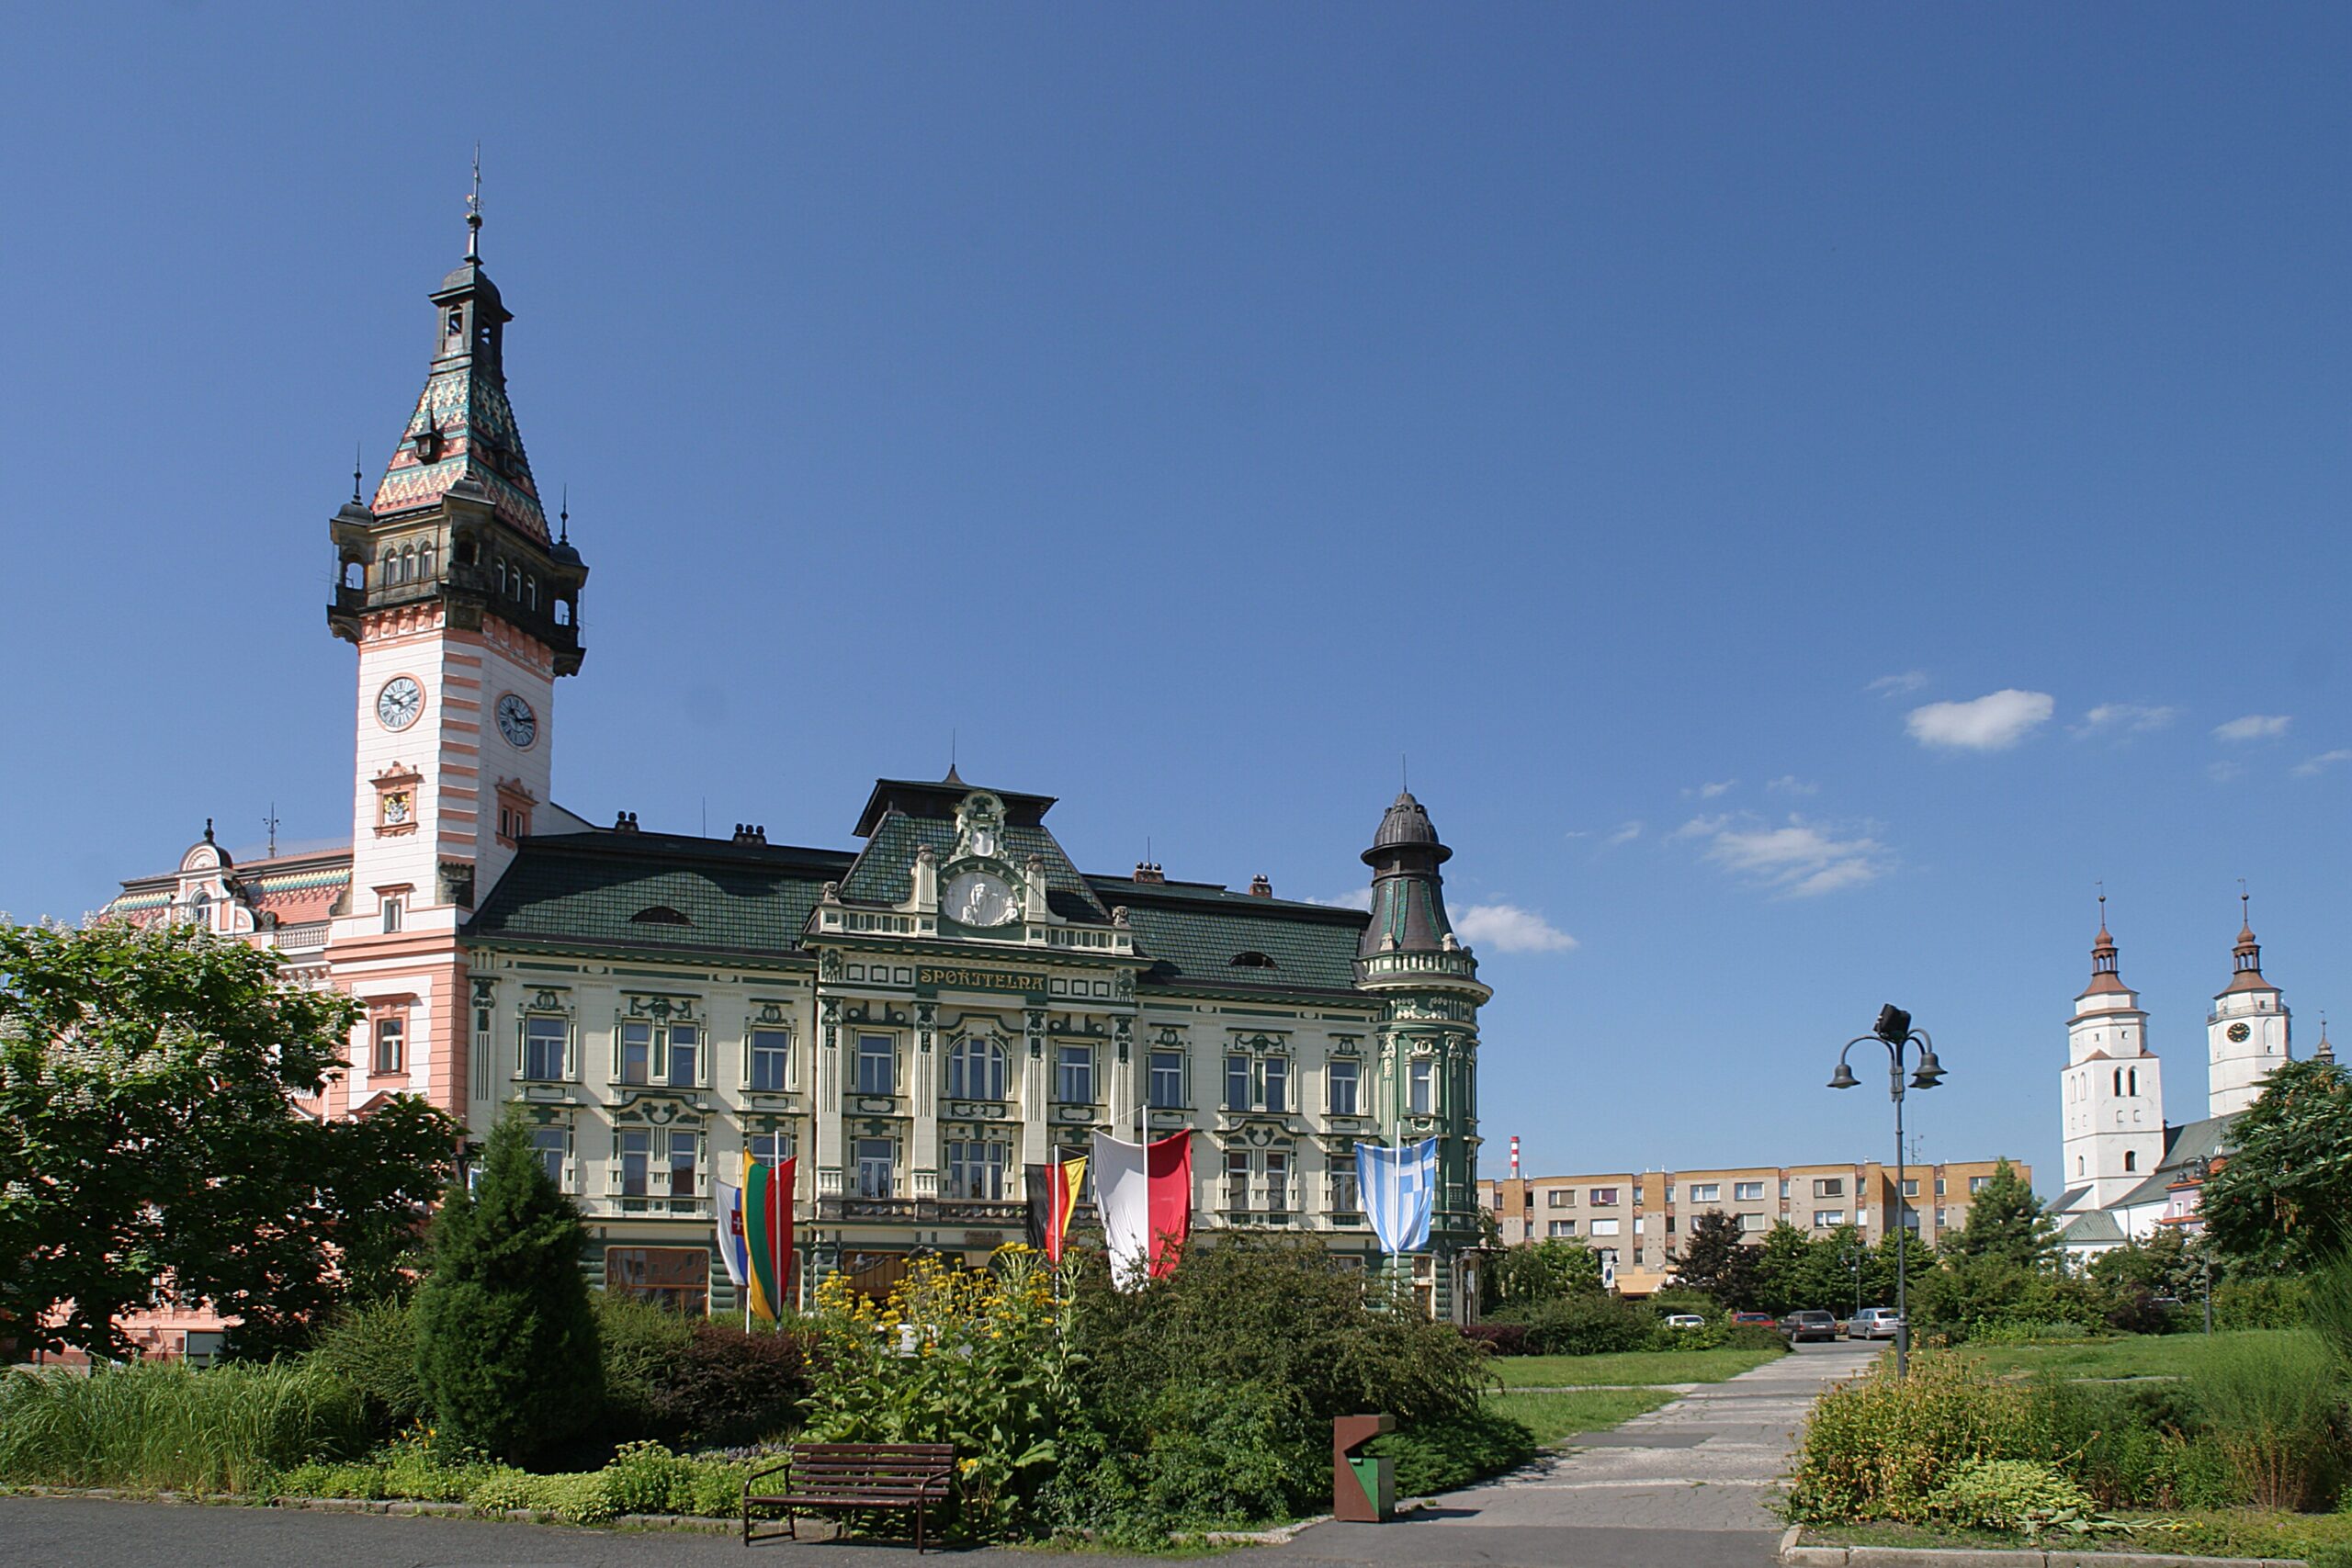 The Savings Bank Palace in Krnov